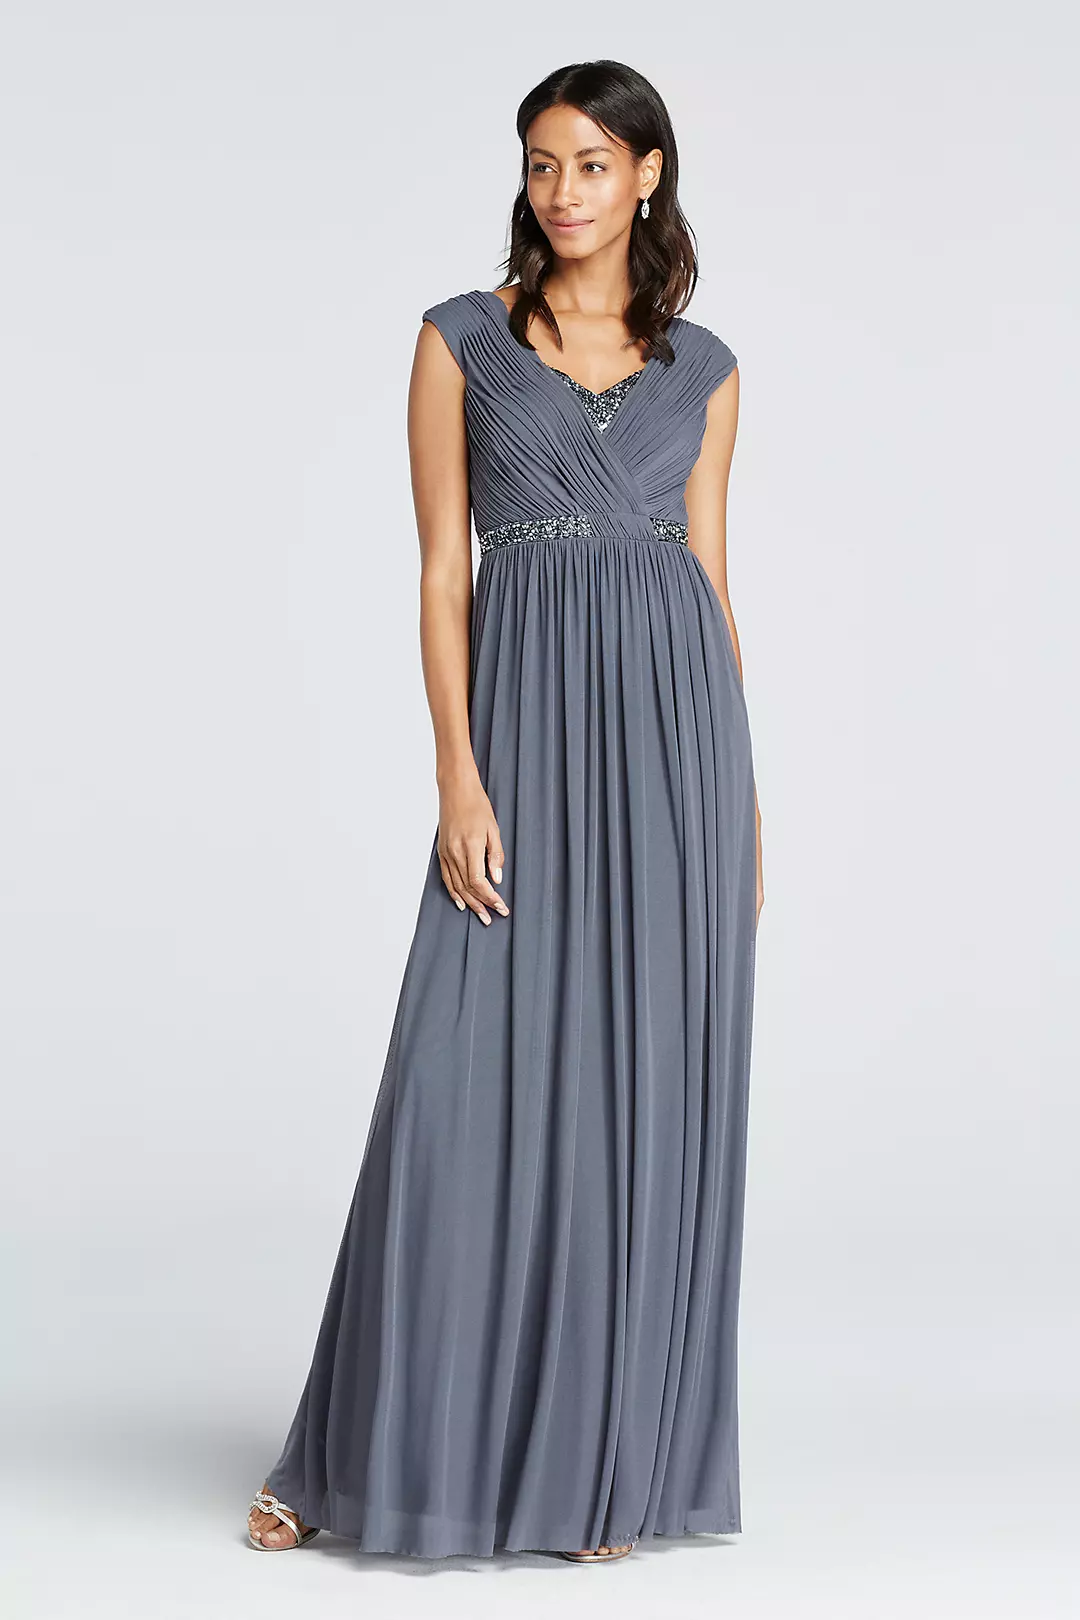 Cap Sleeve V-Neck Floor Length Dress Image